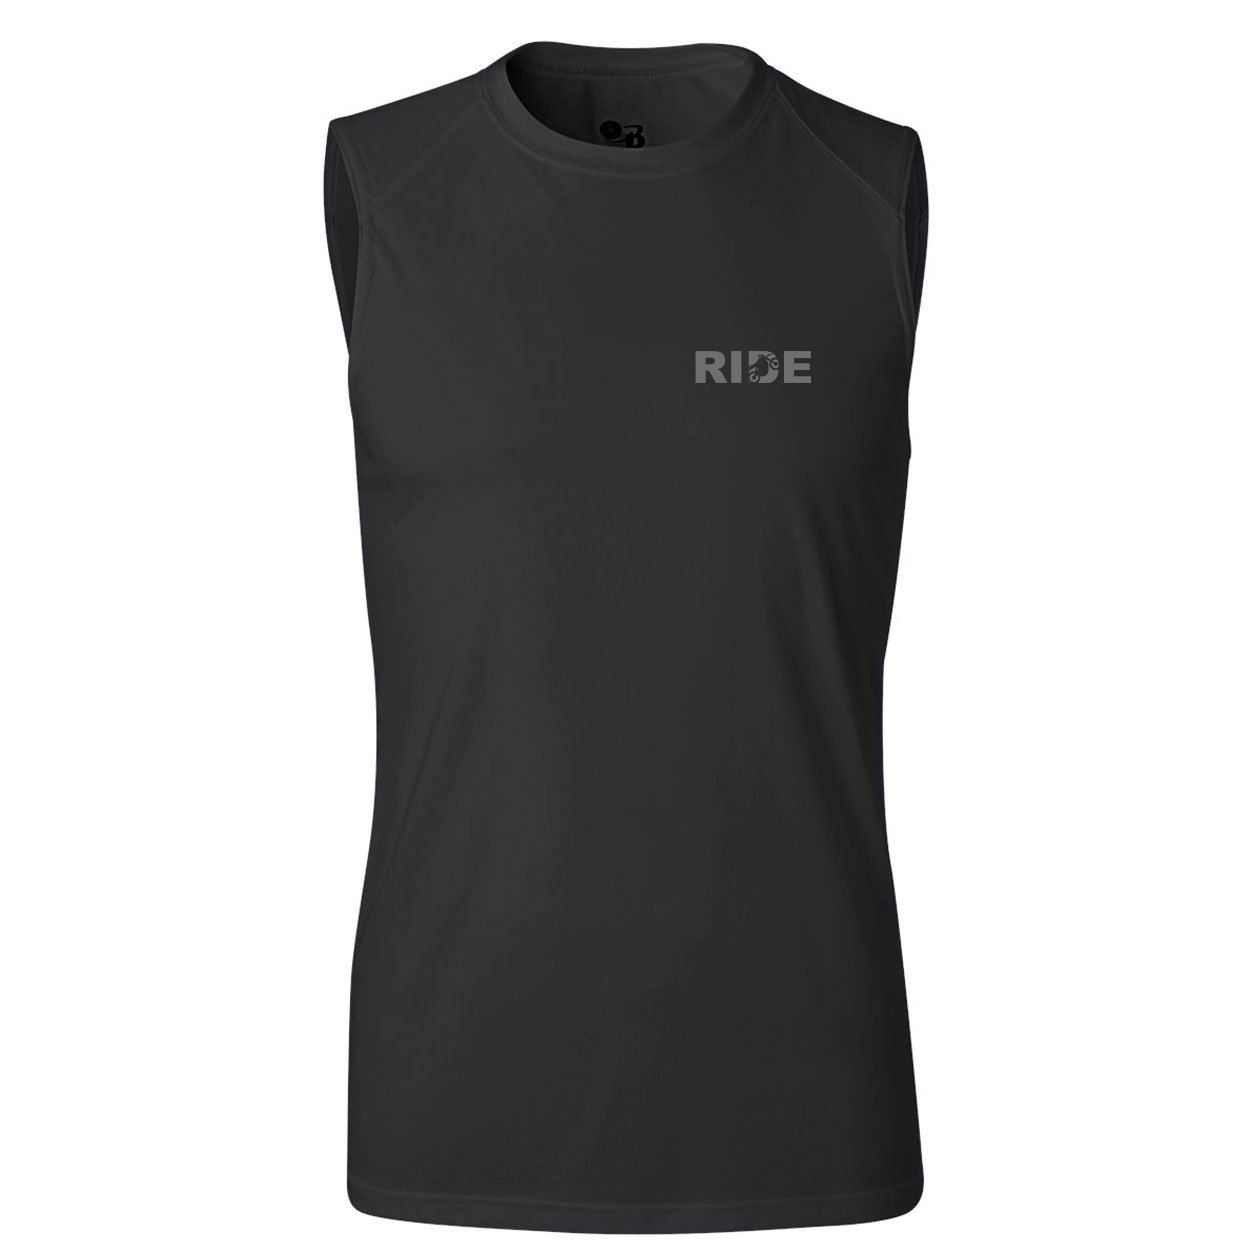 Ride Moto Logo Night Out Unisex Performance Sleeveless T-Shirt Black (Gray Logo)